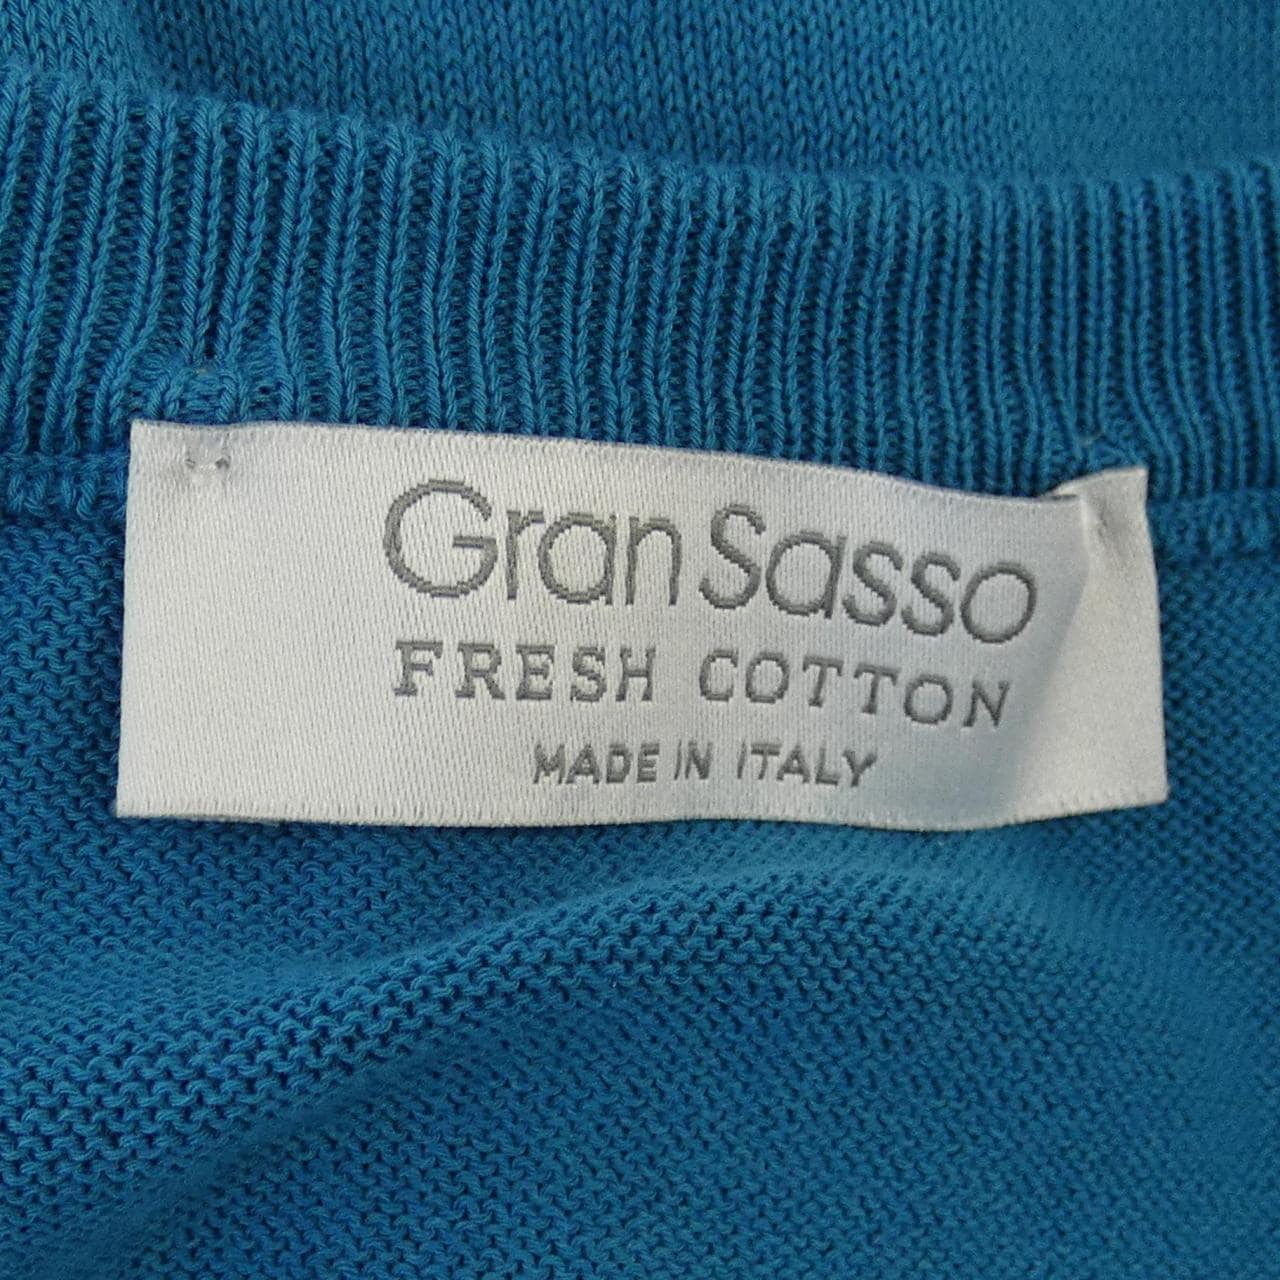 Gran Sasso Gran Sasso knit